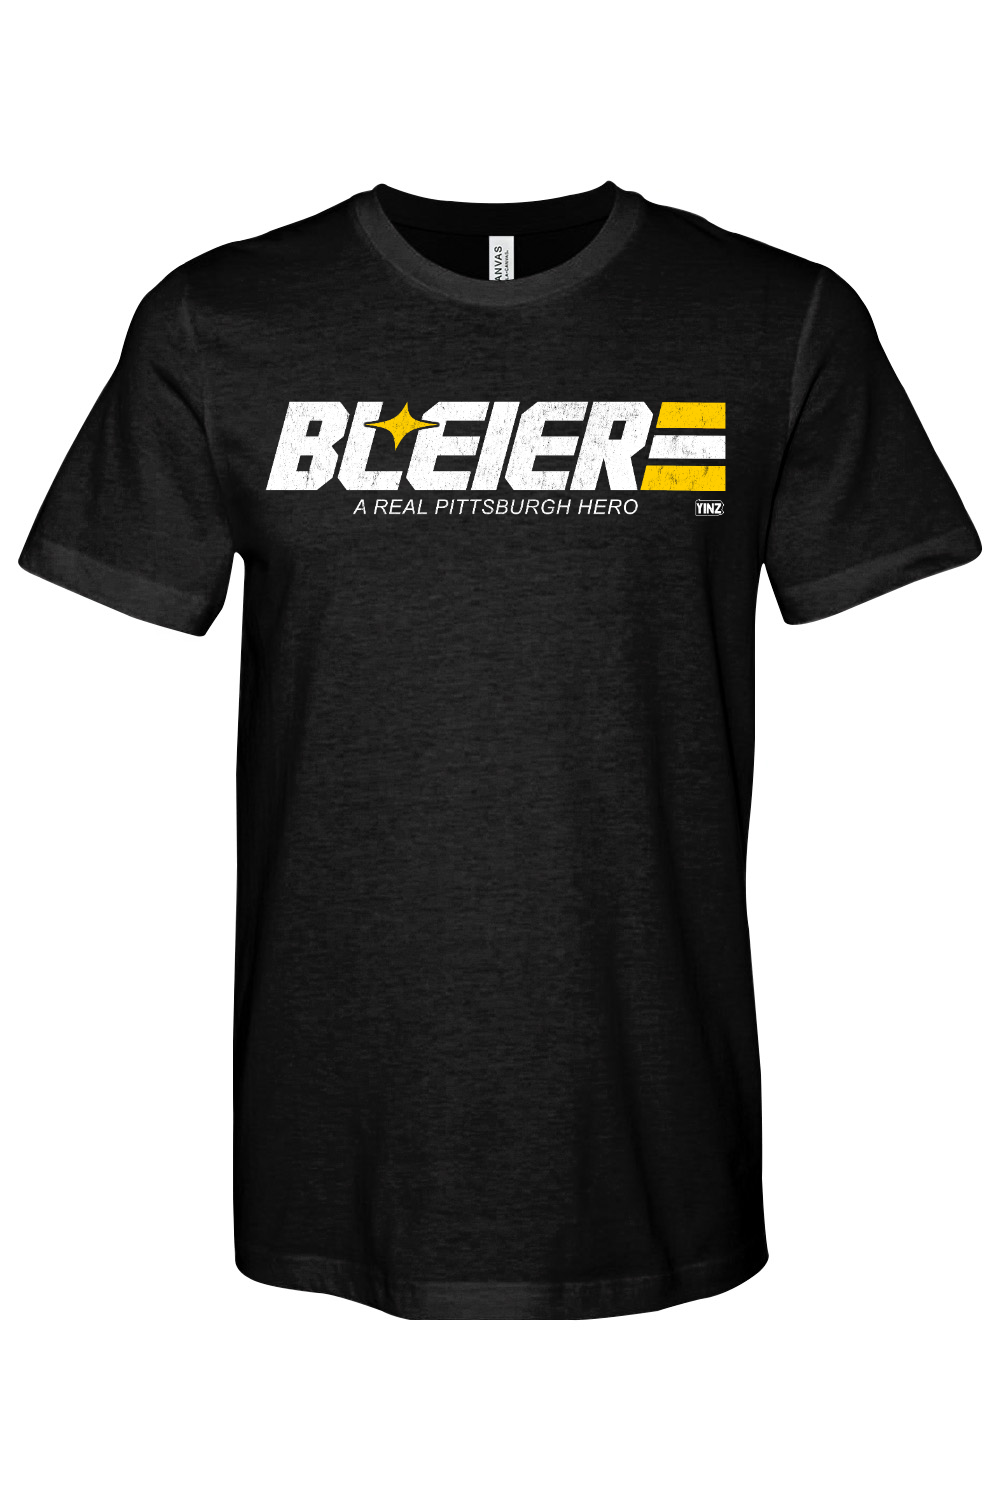 Bleier - A Real Pittsburgh Hero - Yinzylvania